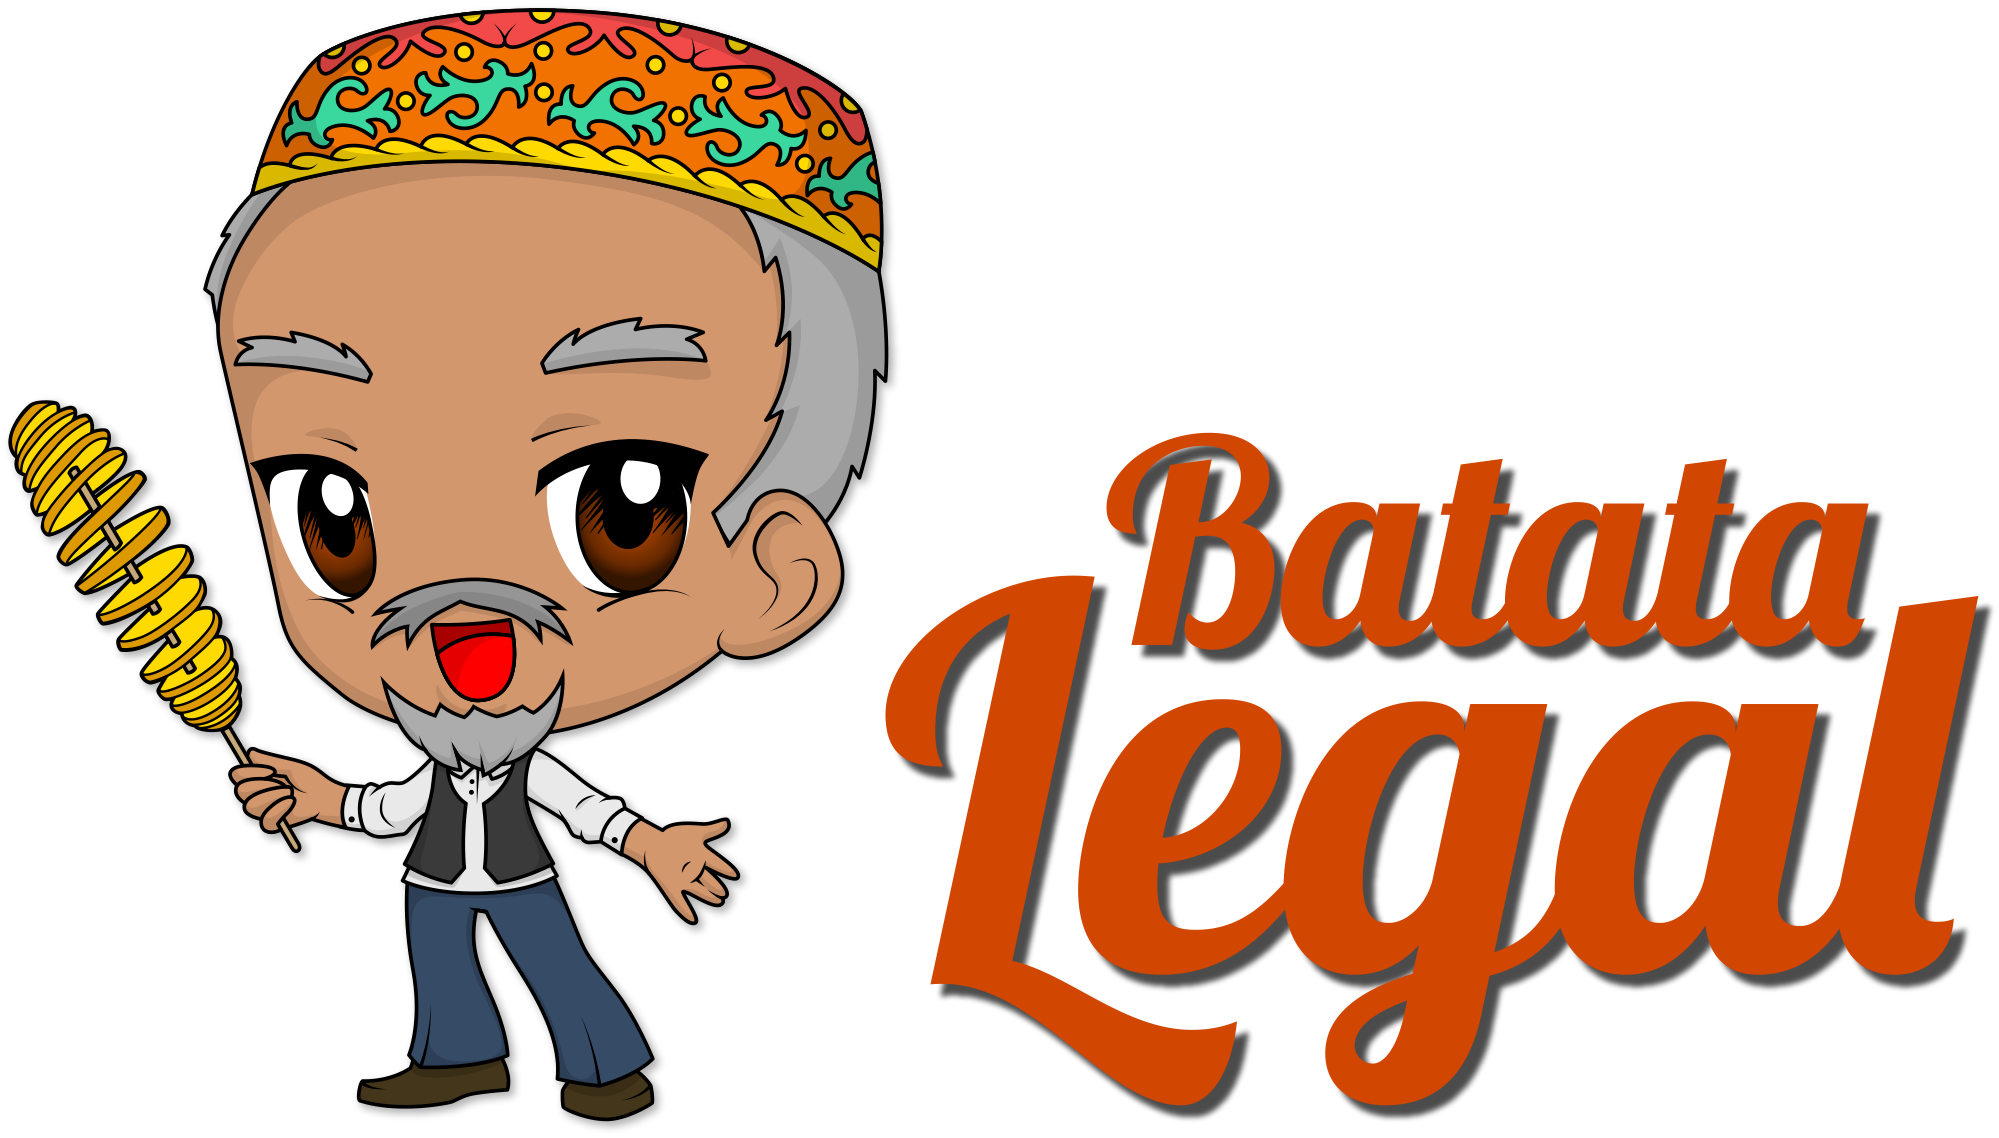 Batata Legal - Oficial